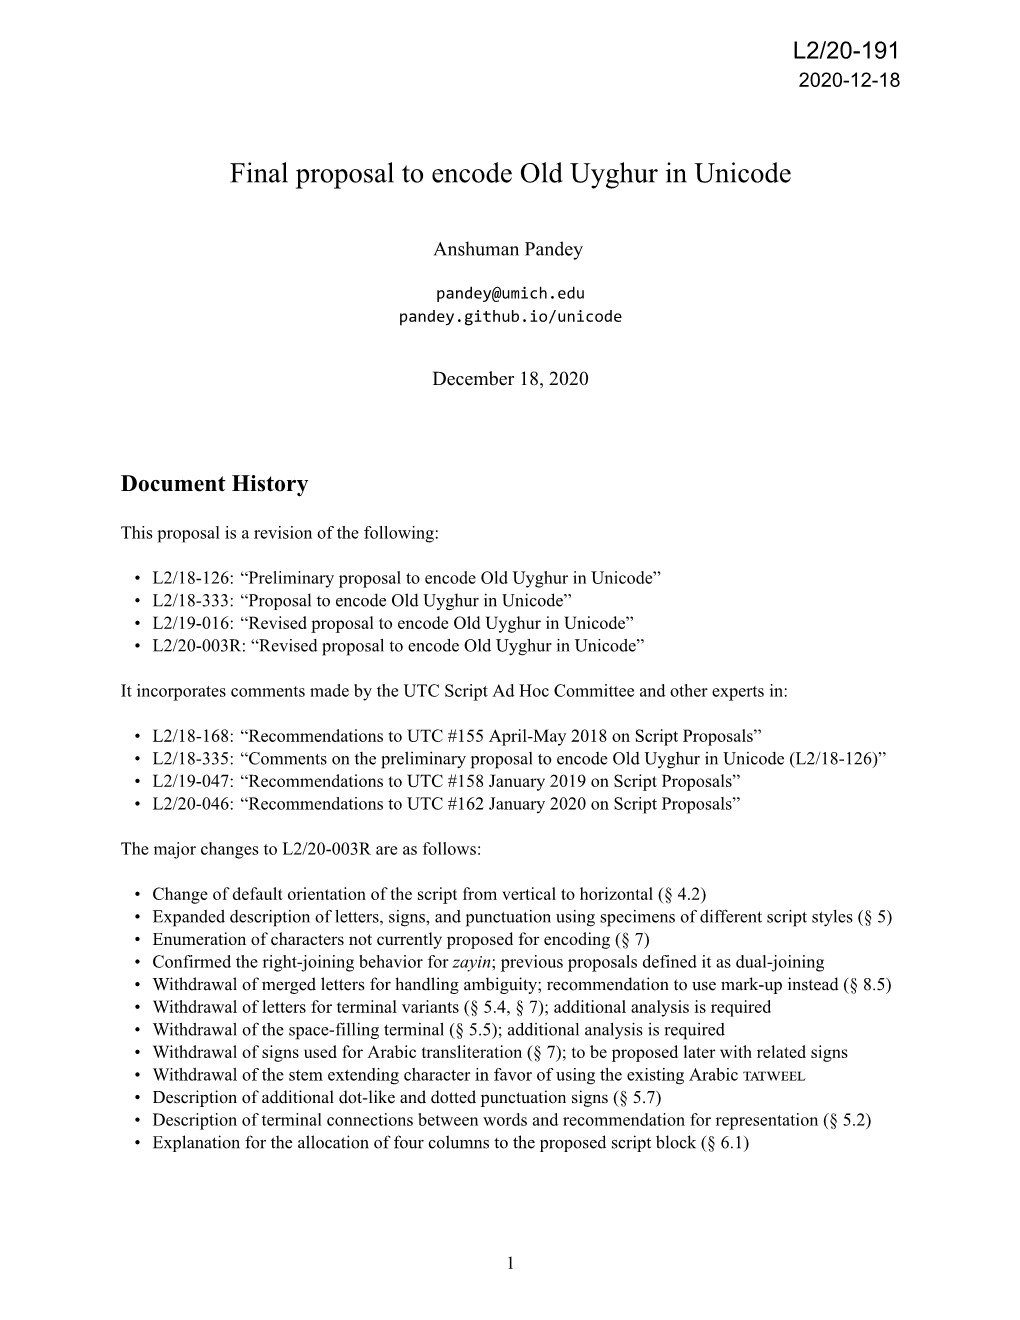 Final Proposal to Encode Old Uyghur in Unicode